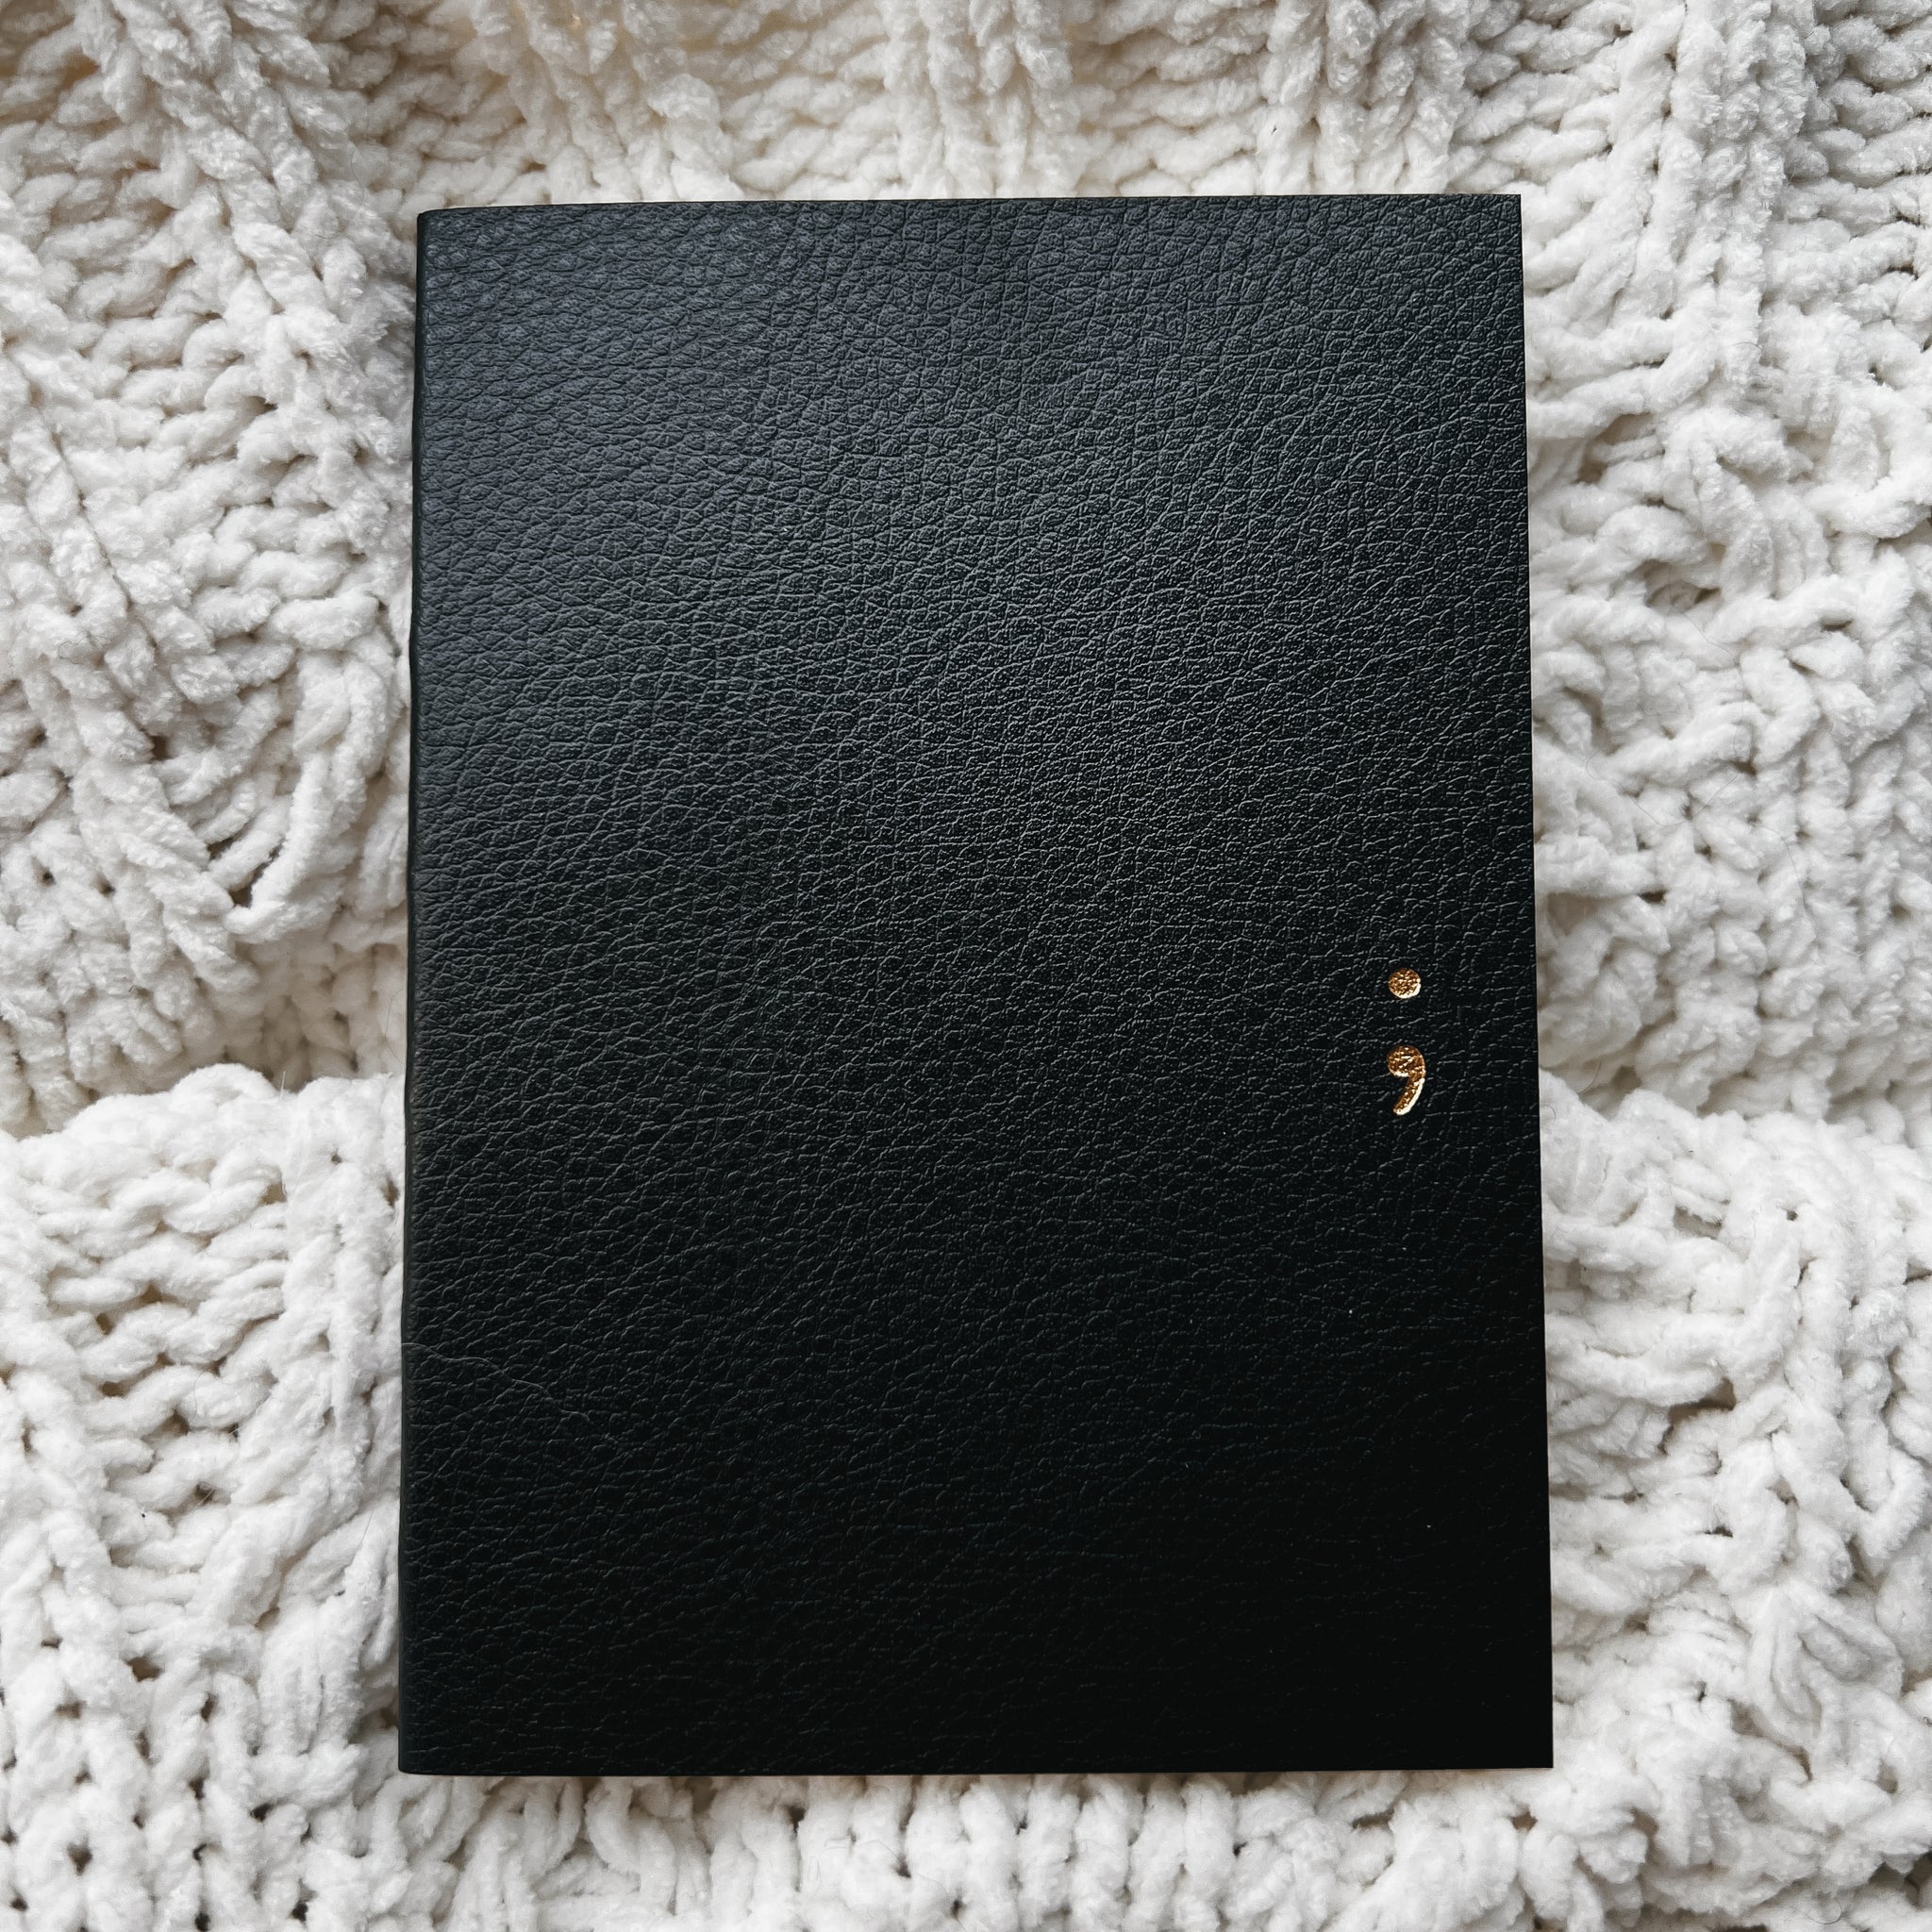 Passport Insert (PU Leatherette Cover)